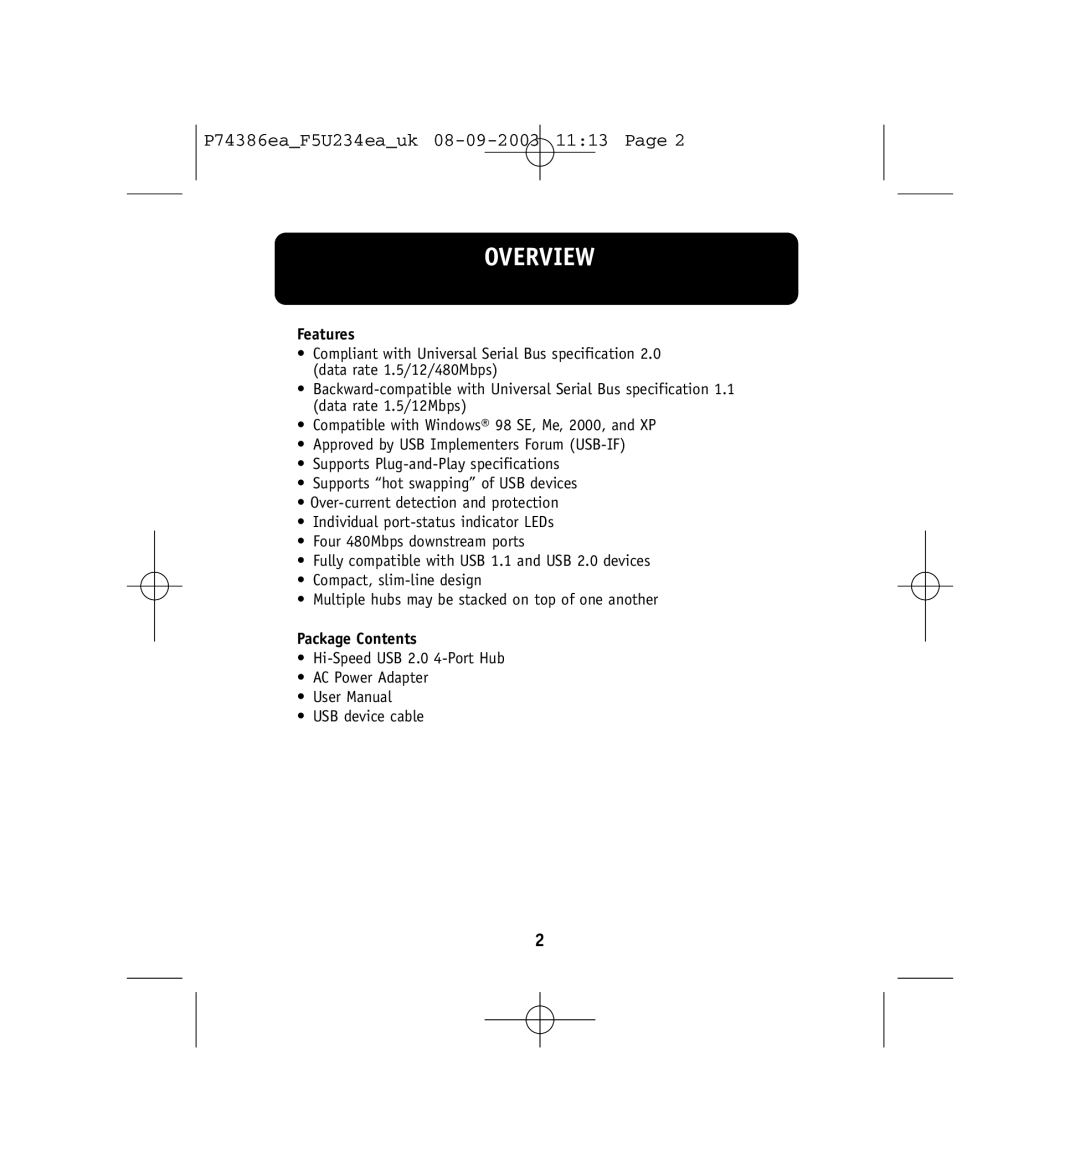 Belkin FSU234ea user manual Overview, Features, Package Contents, P74386eaF5U234eauk 08-09-2003 1113 Page 